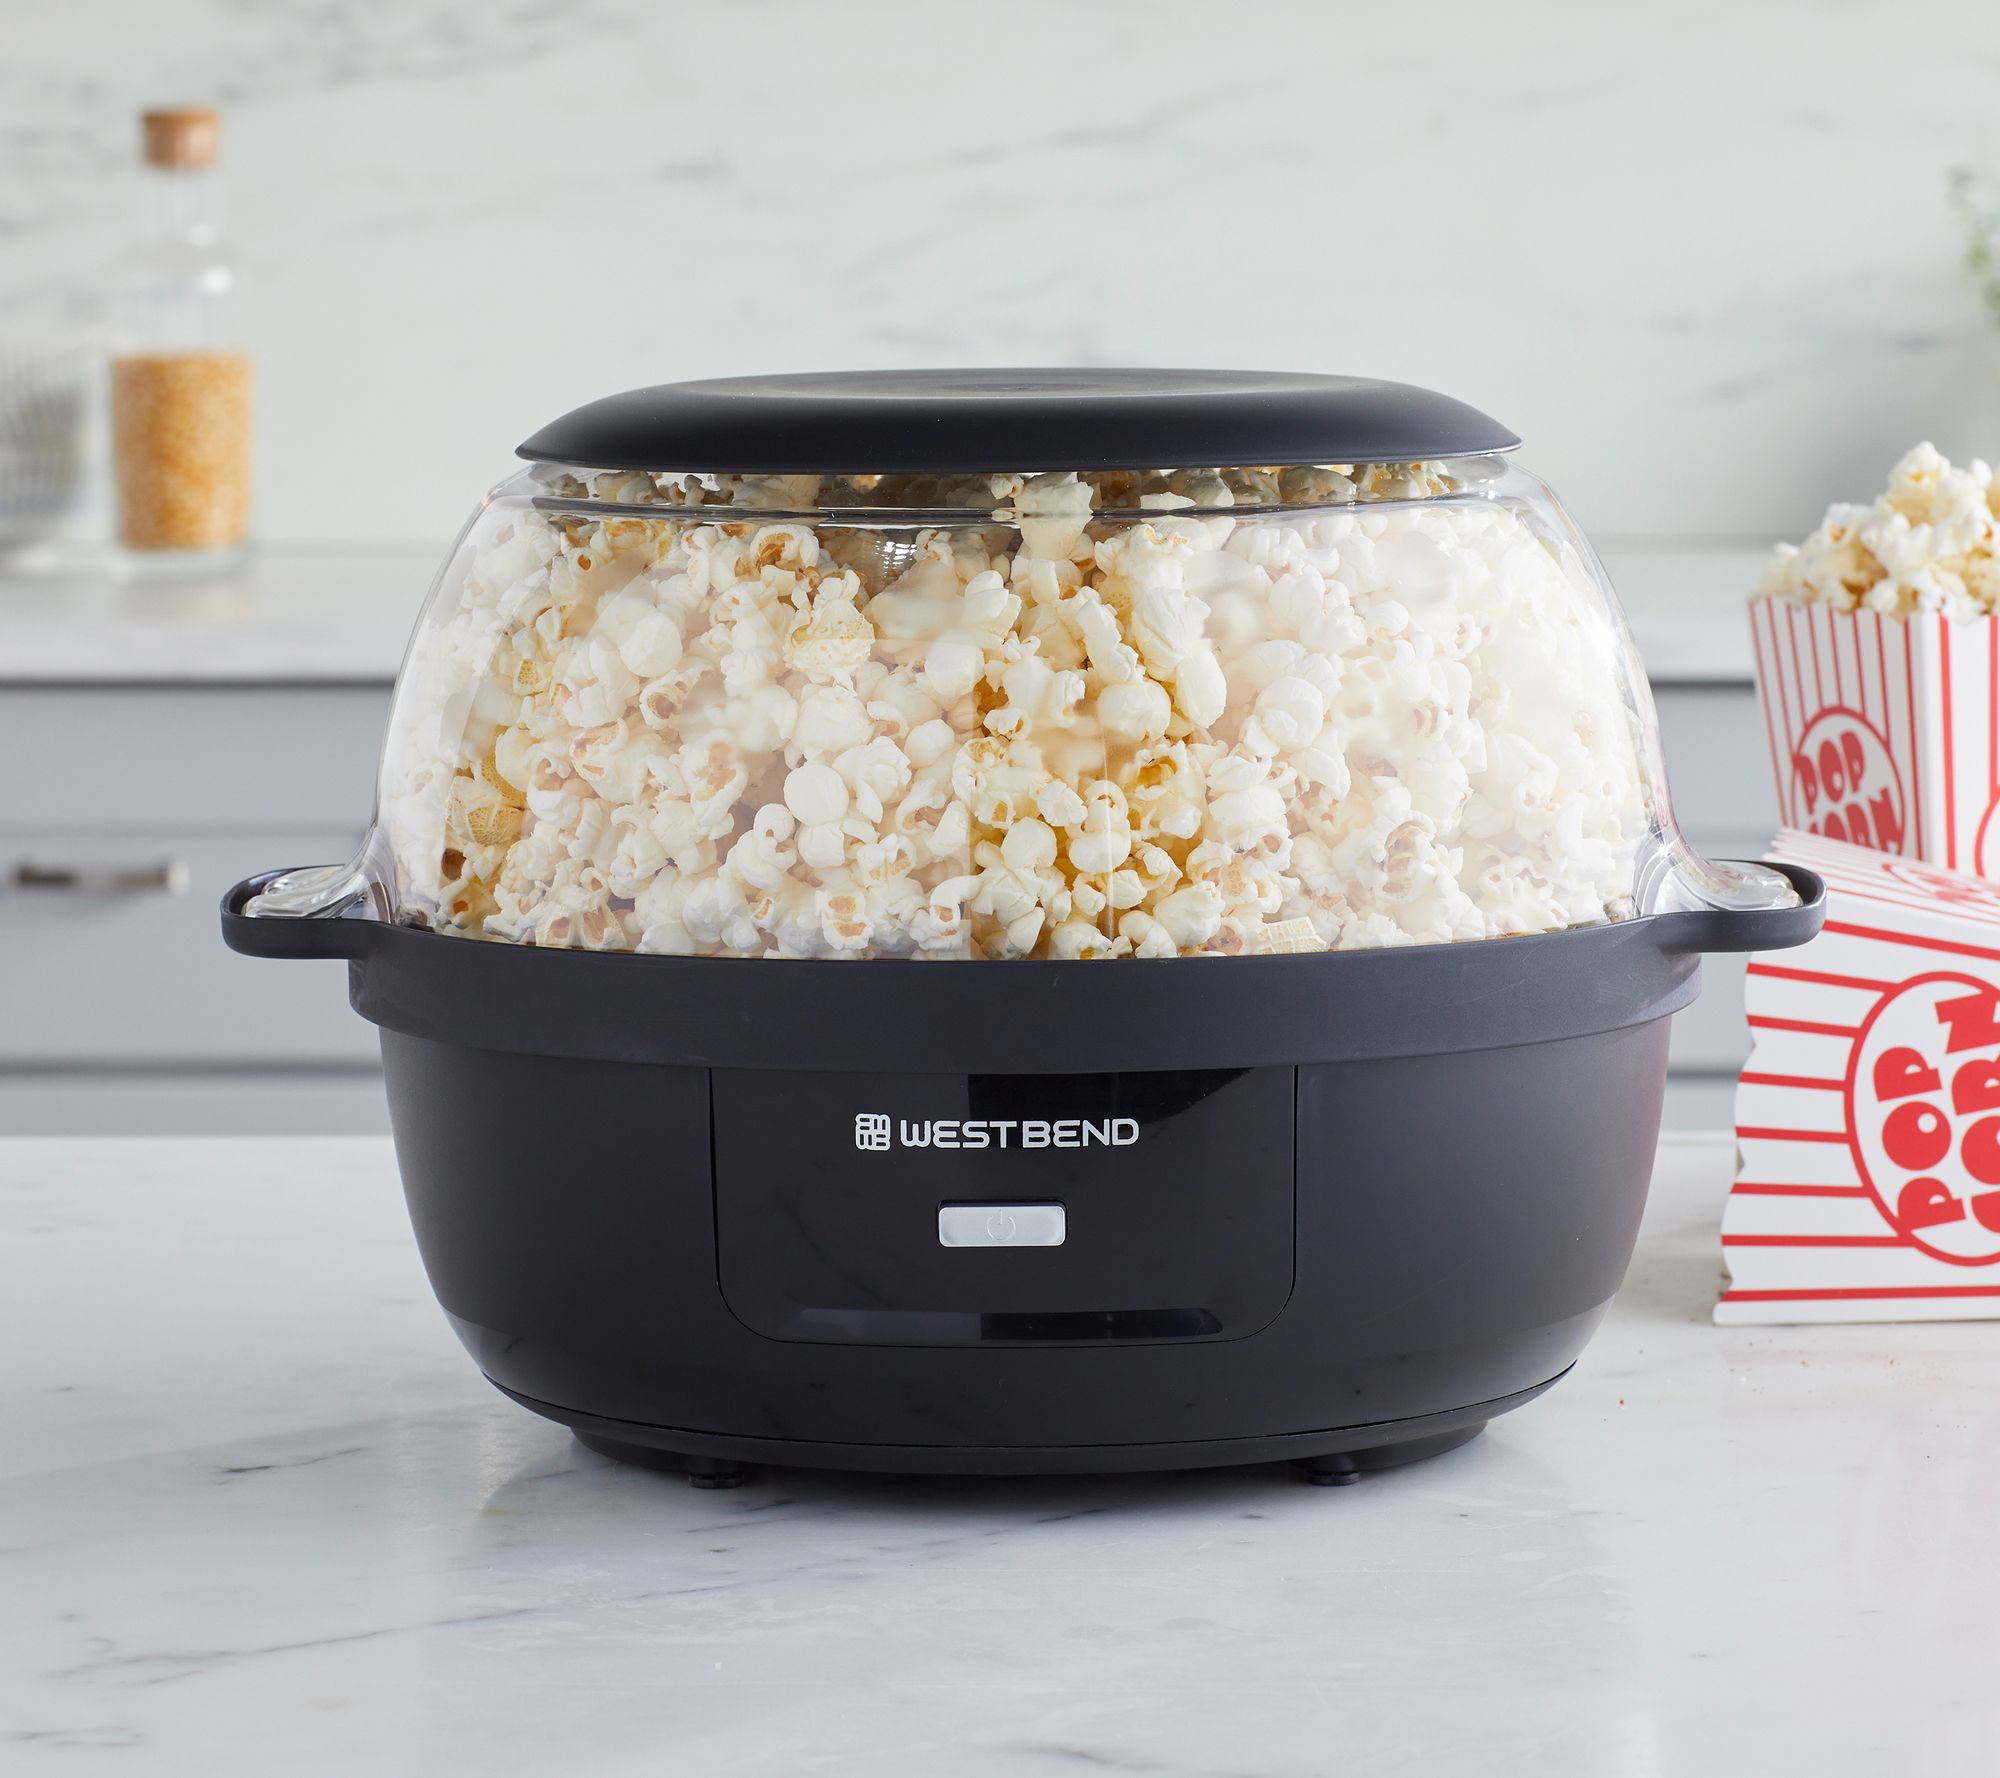 Product Review-West Bend Stir Crazy Popcorn Popper 